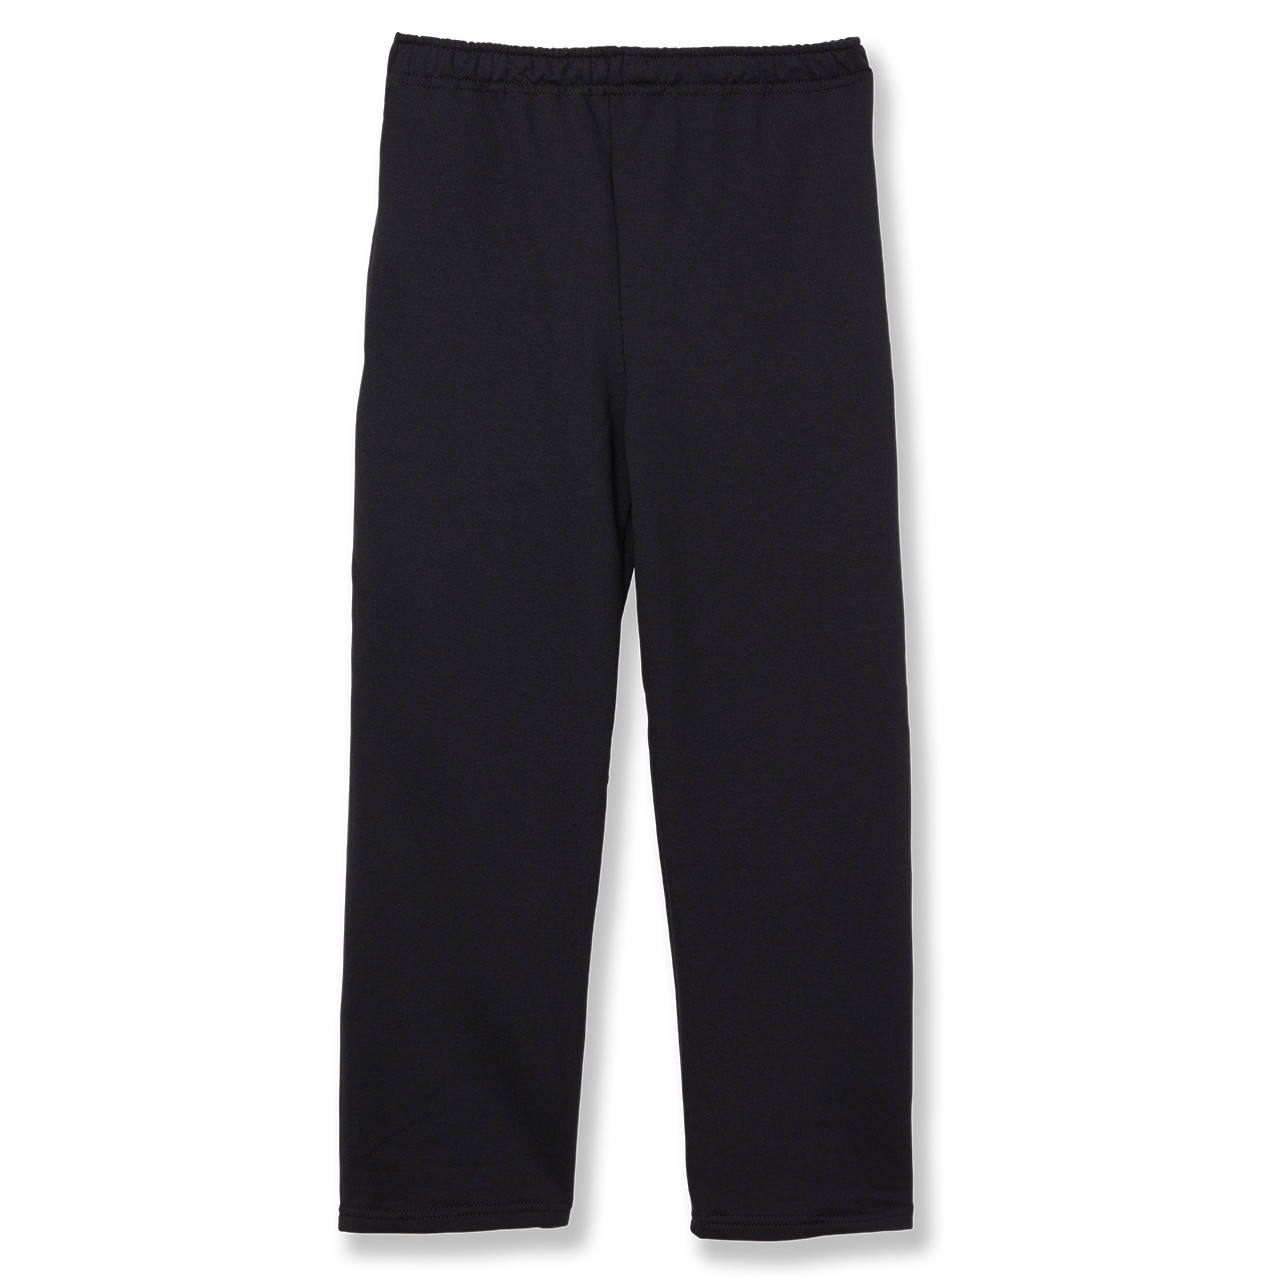 Open Bottom Sweatpants [MD068-974-BLACK] - FlynnO'Hara Uniforms